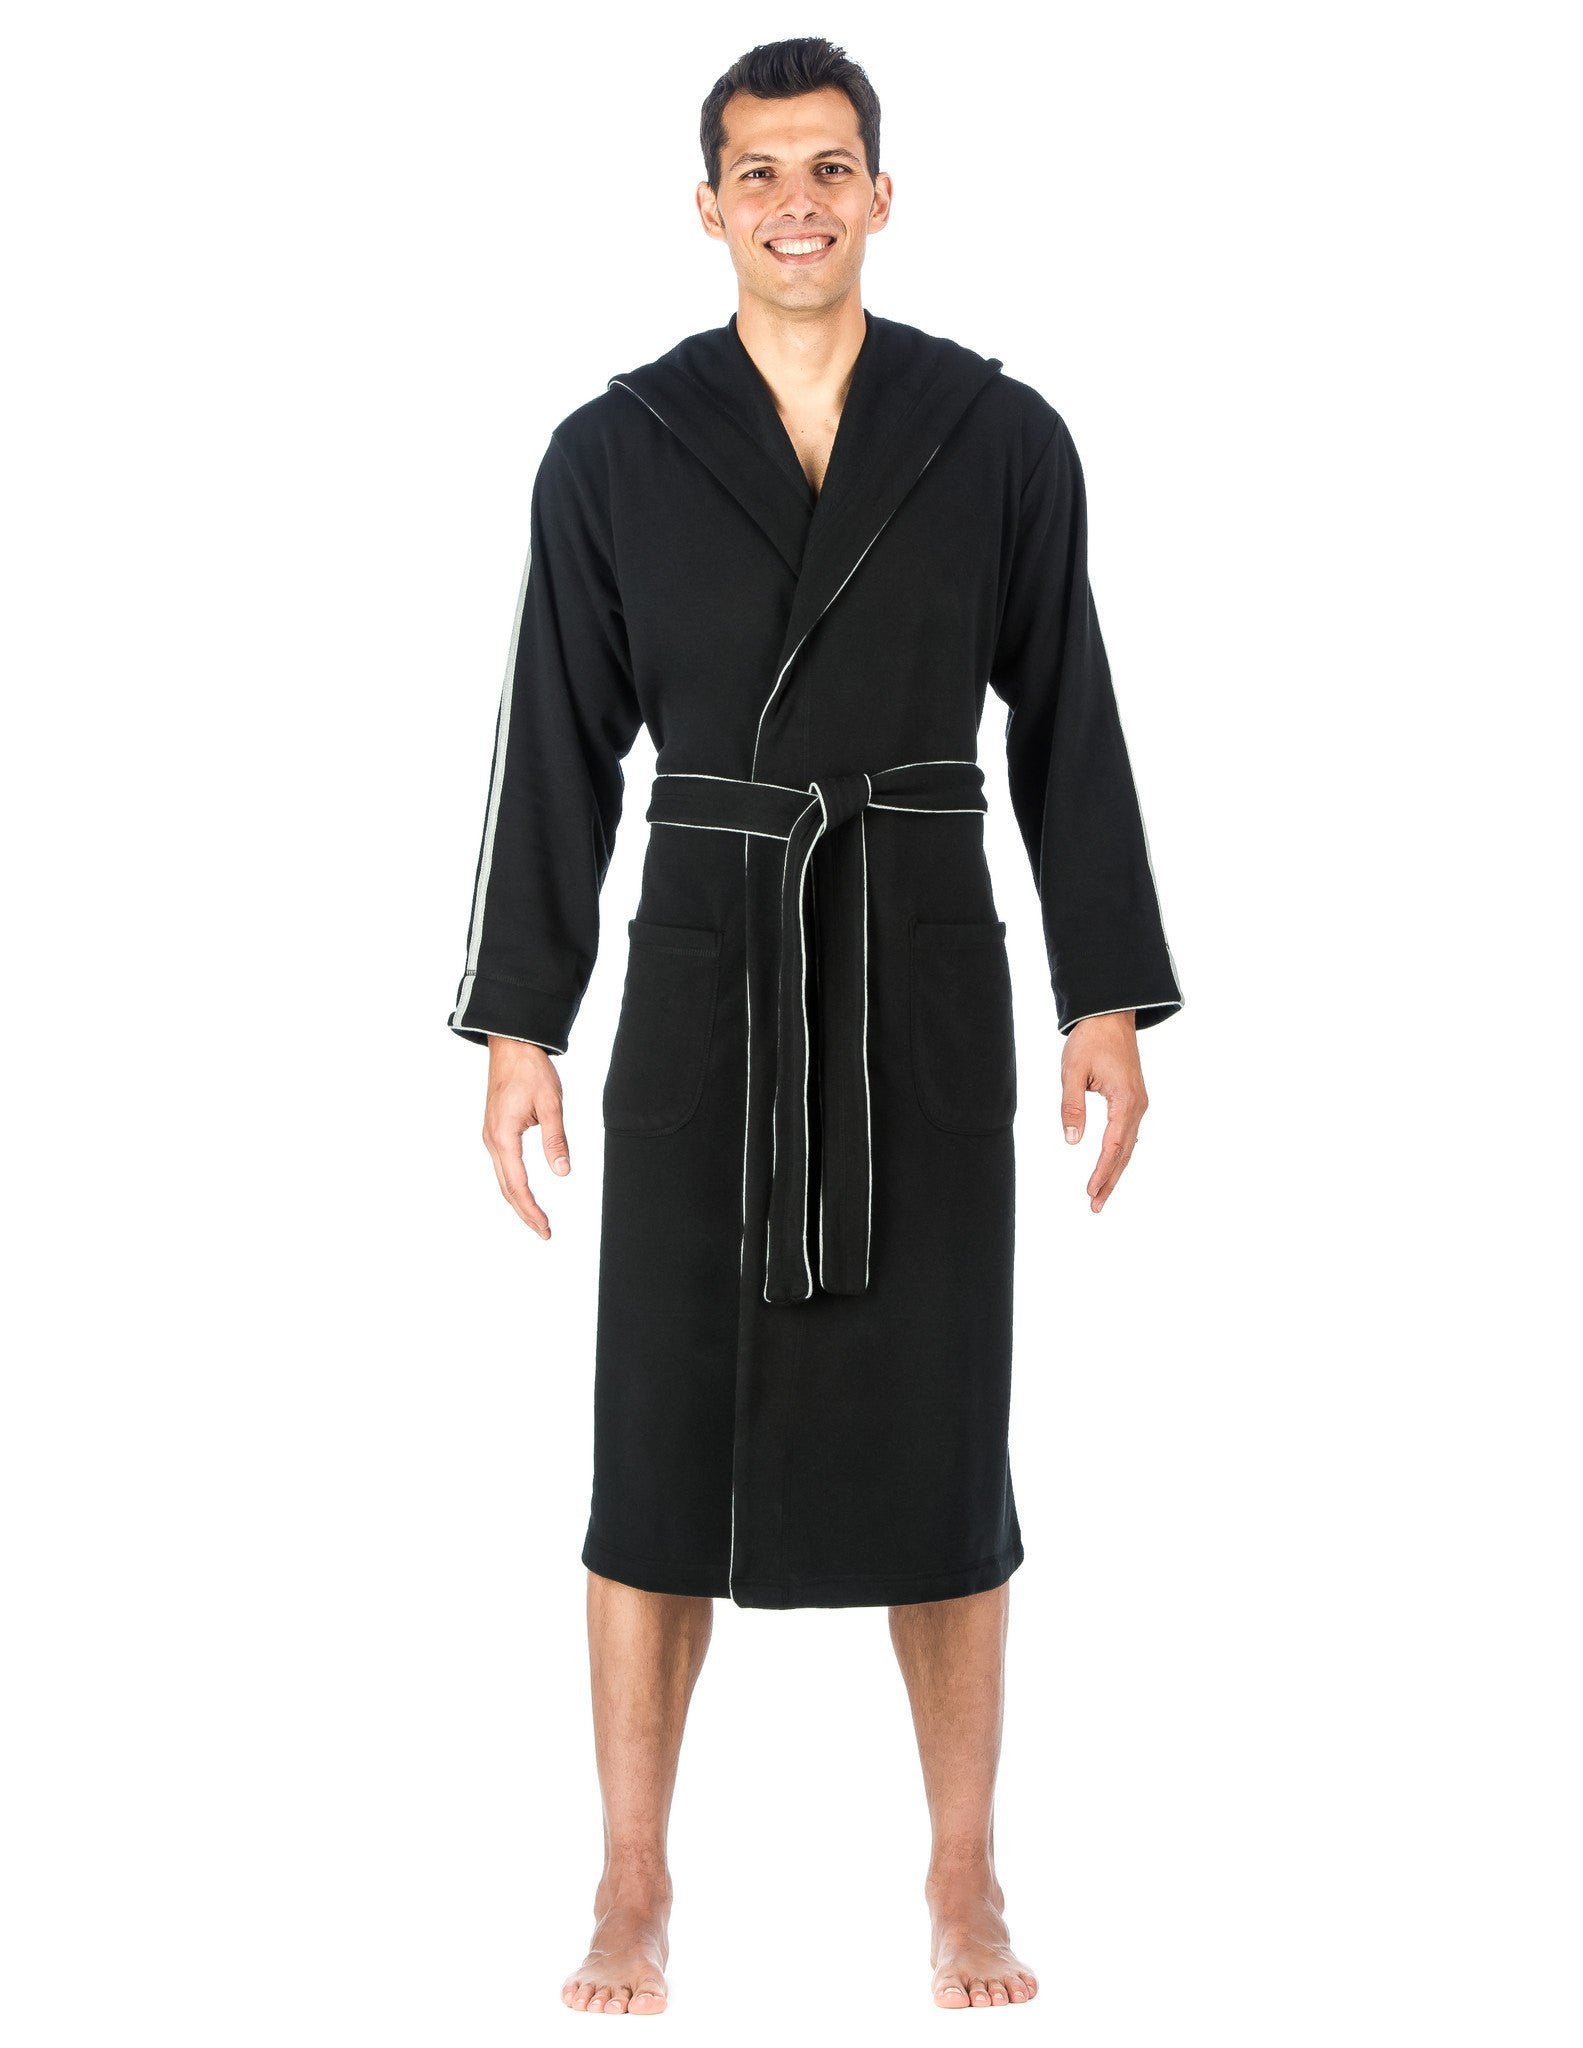 Men's Fleece Lined Hooded Robe